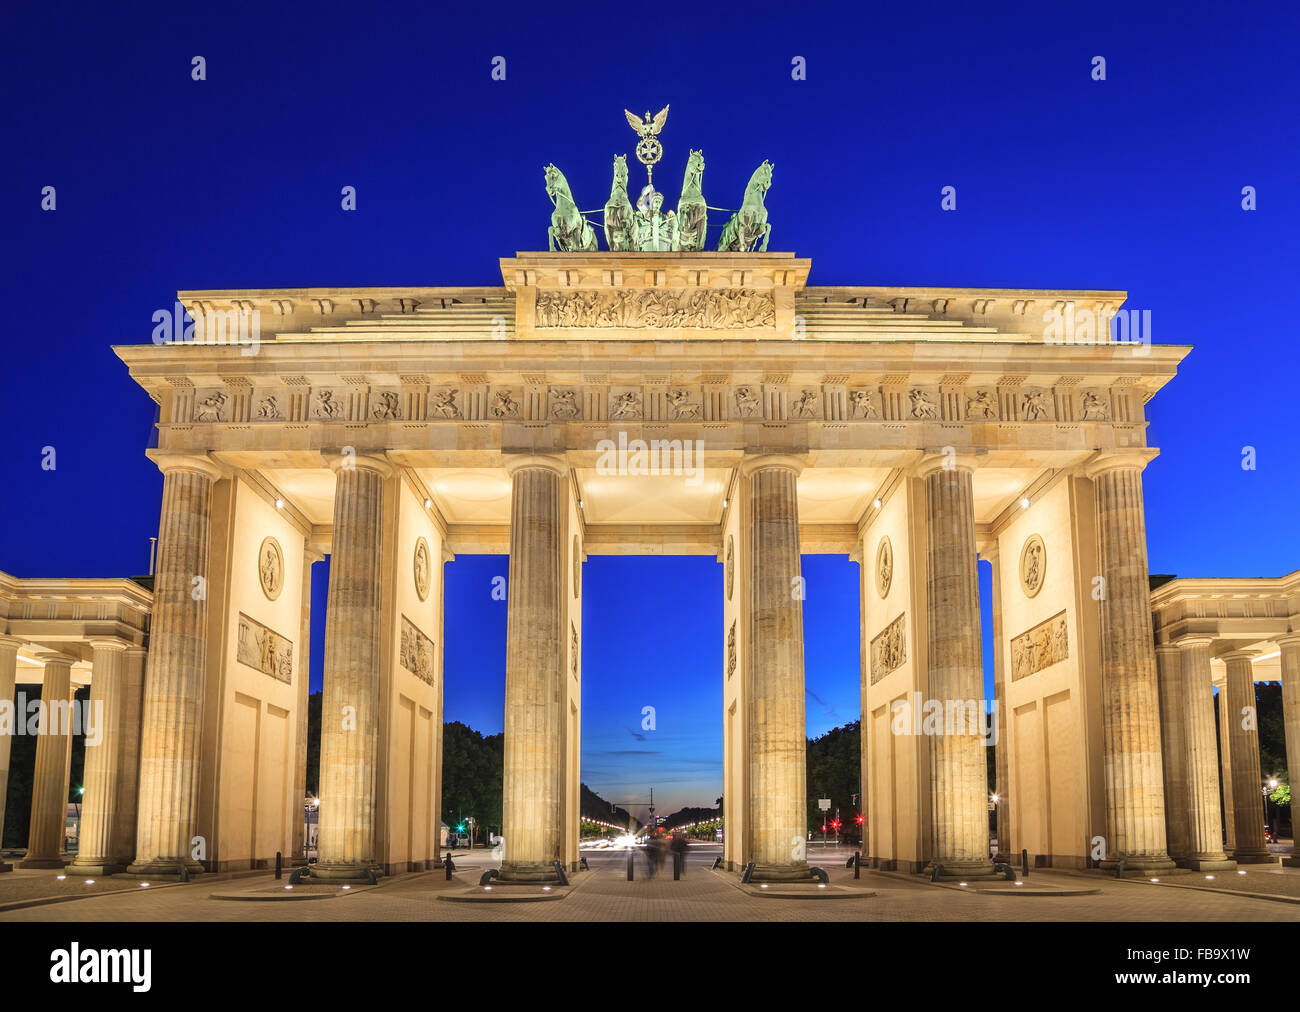 Porte de Brandebourg - Berlin - Allemagne Banque D'Images